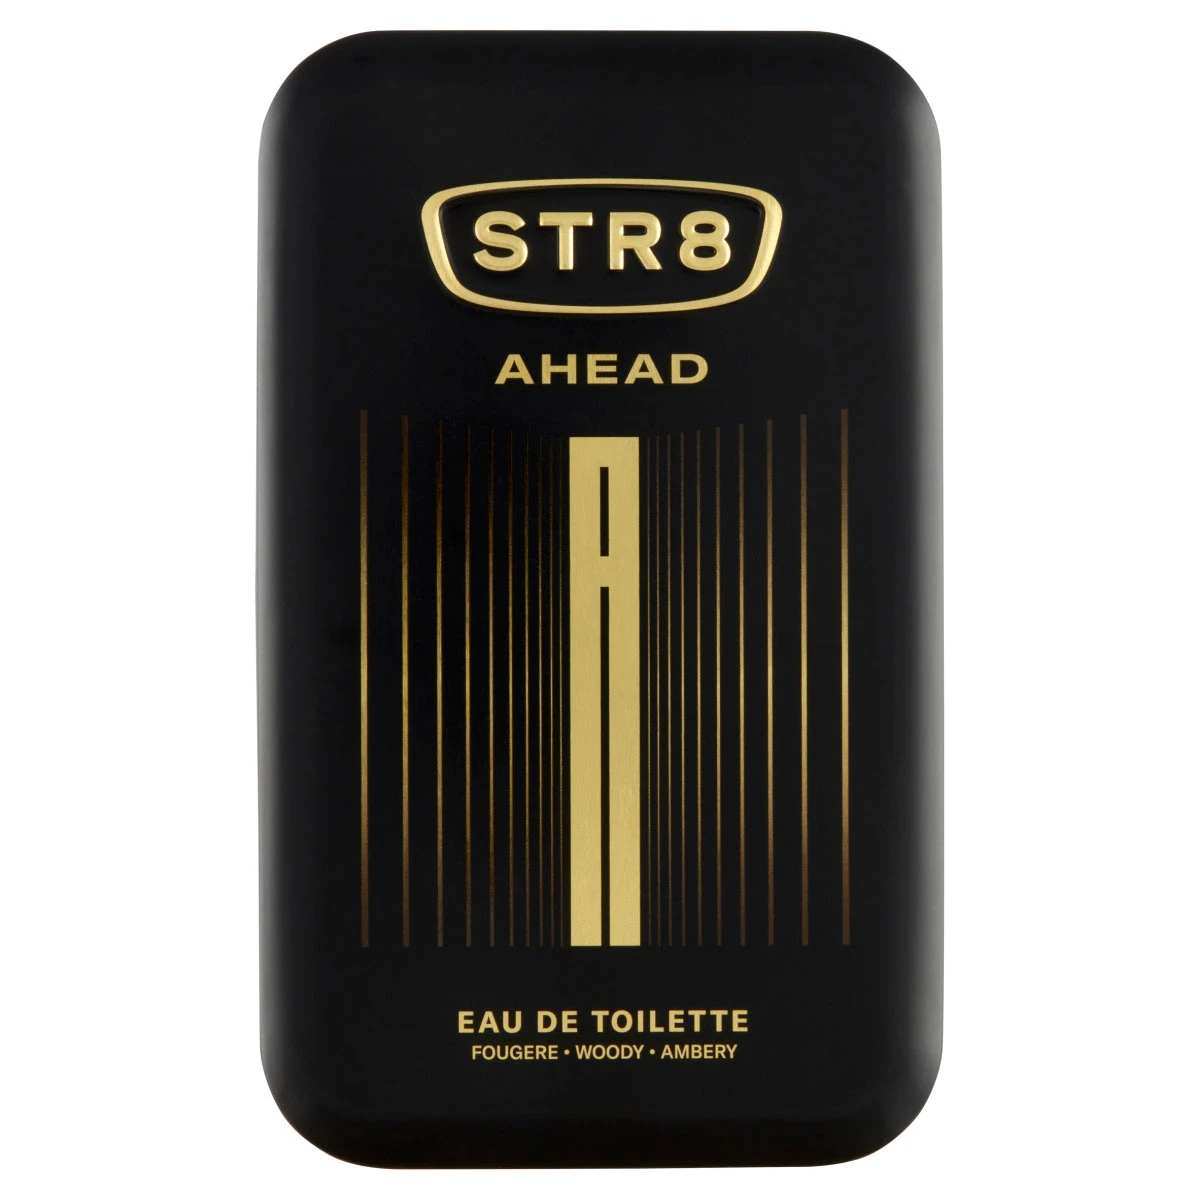 STR8 Ahead eau de toilette 50 ml